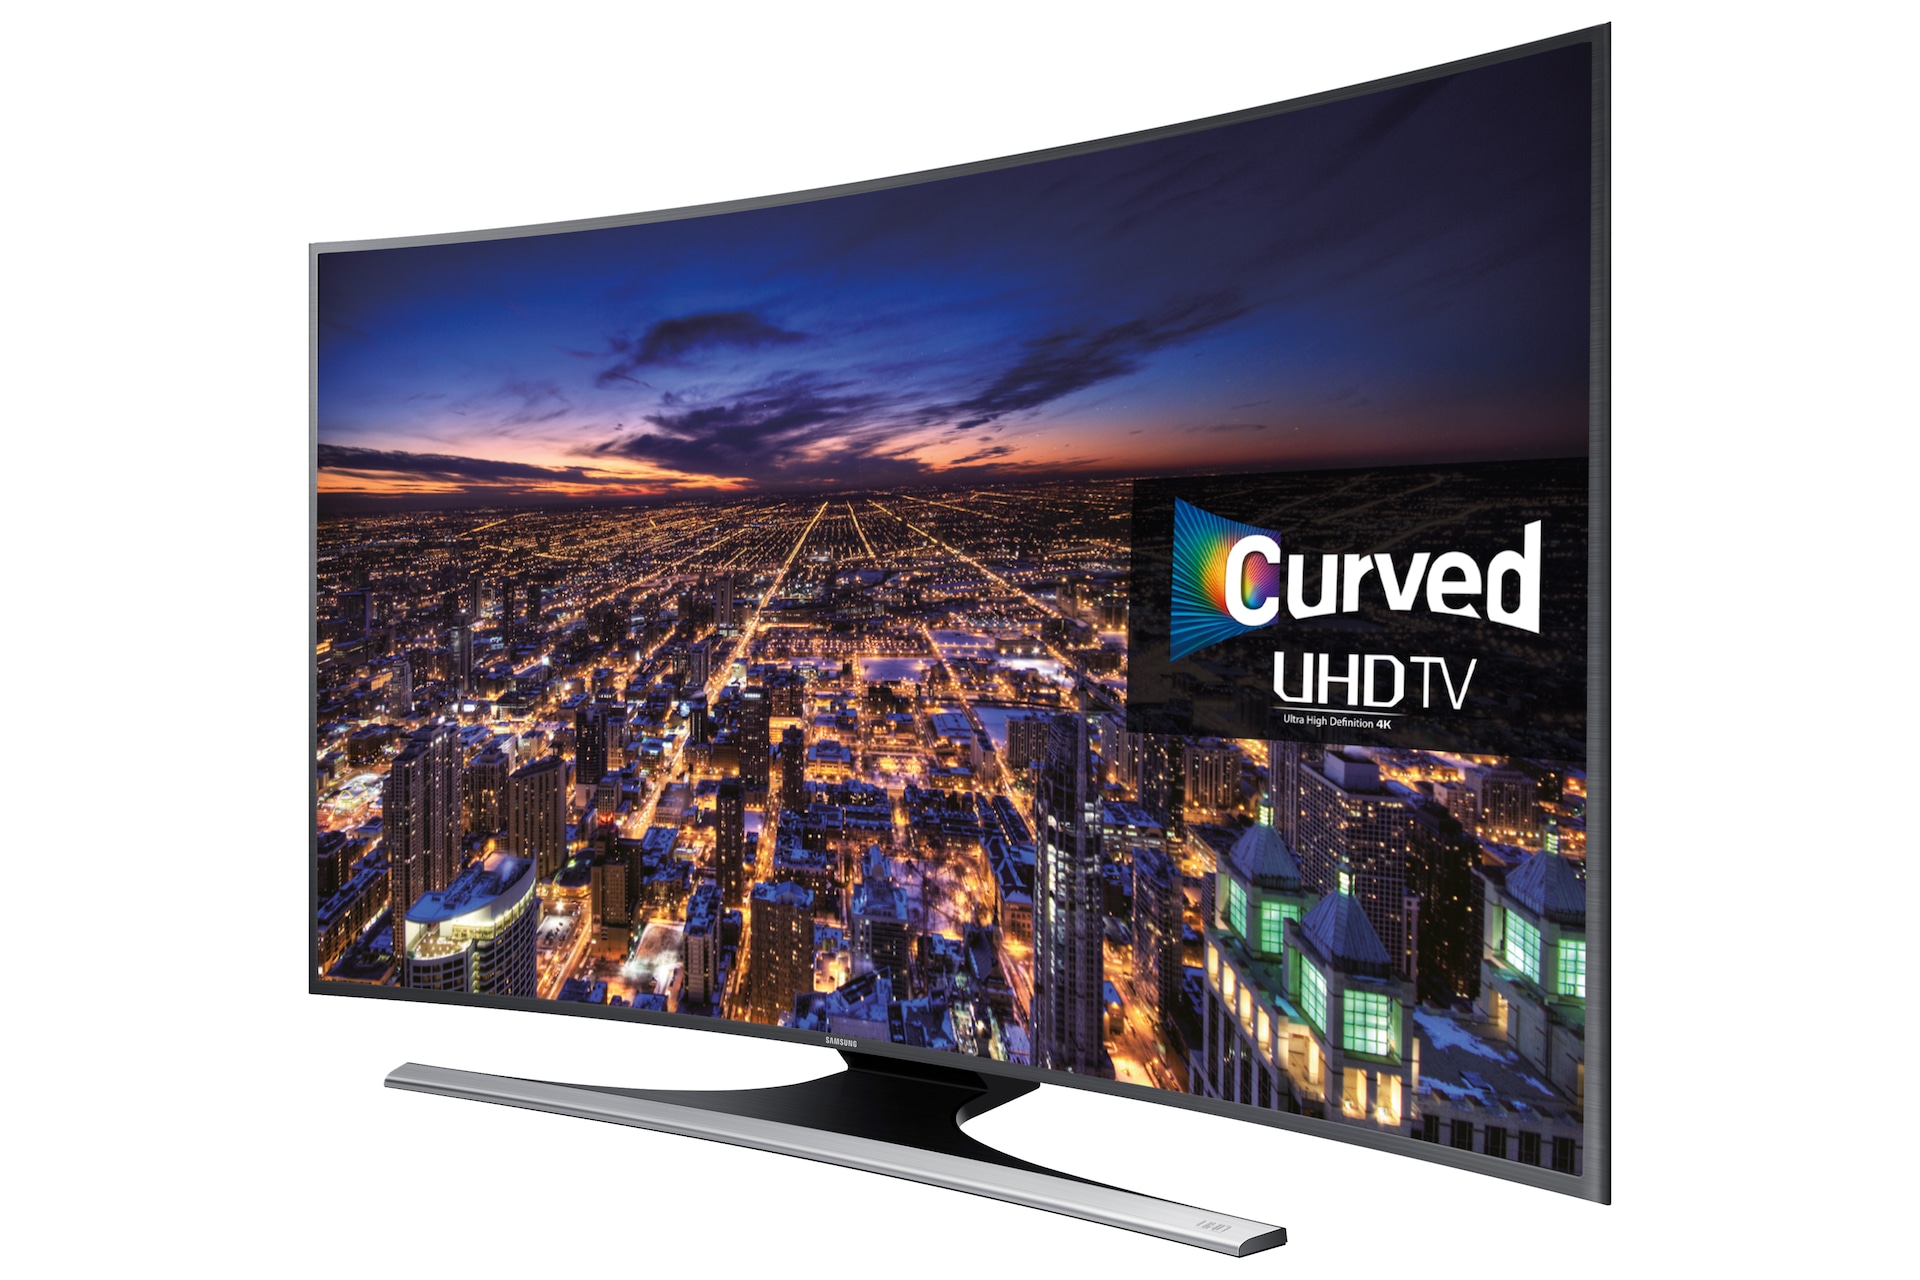 Samsung UHD TV JU6500 - Best 55 inch Smart TV to buy | Samsung UK